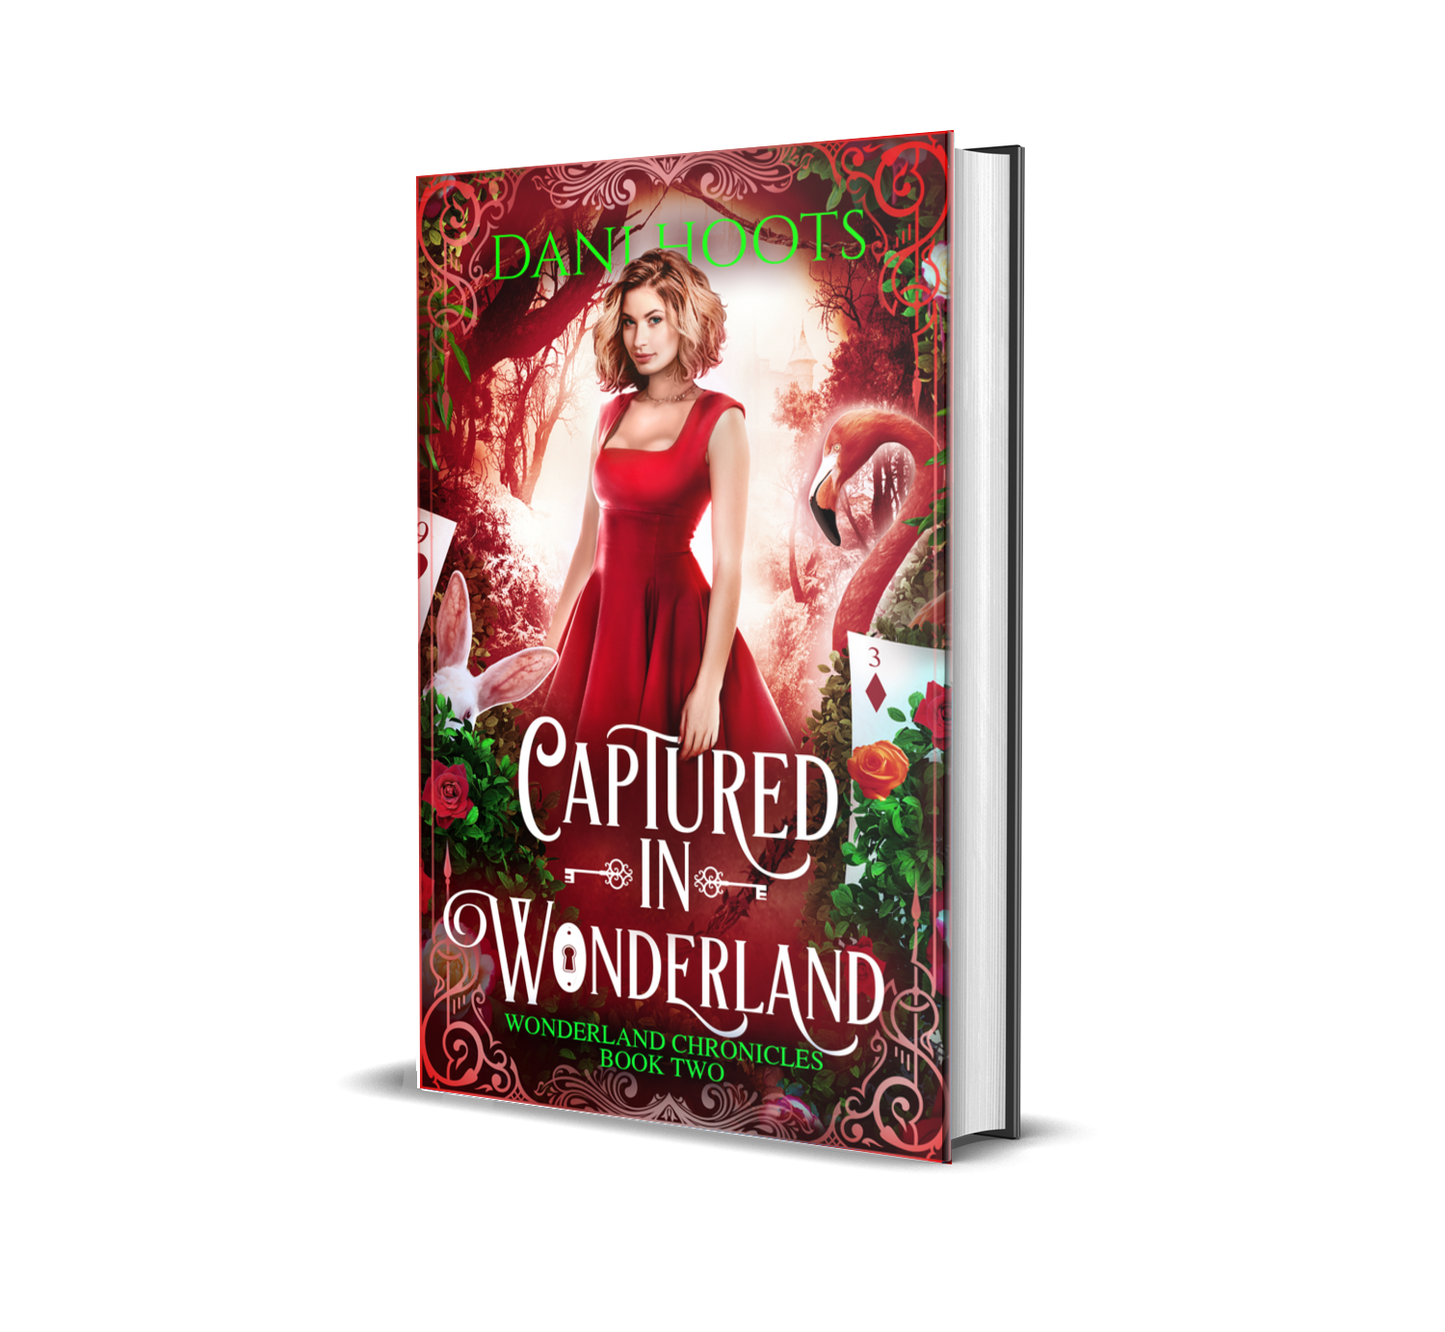 Captured in Wonderland (Wonderland Chronicles, Book 2) hardcover — SIGNED